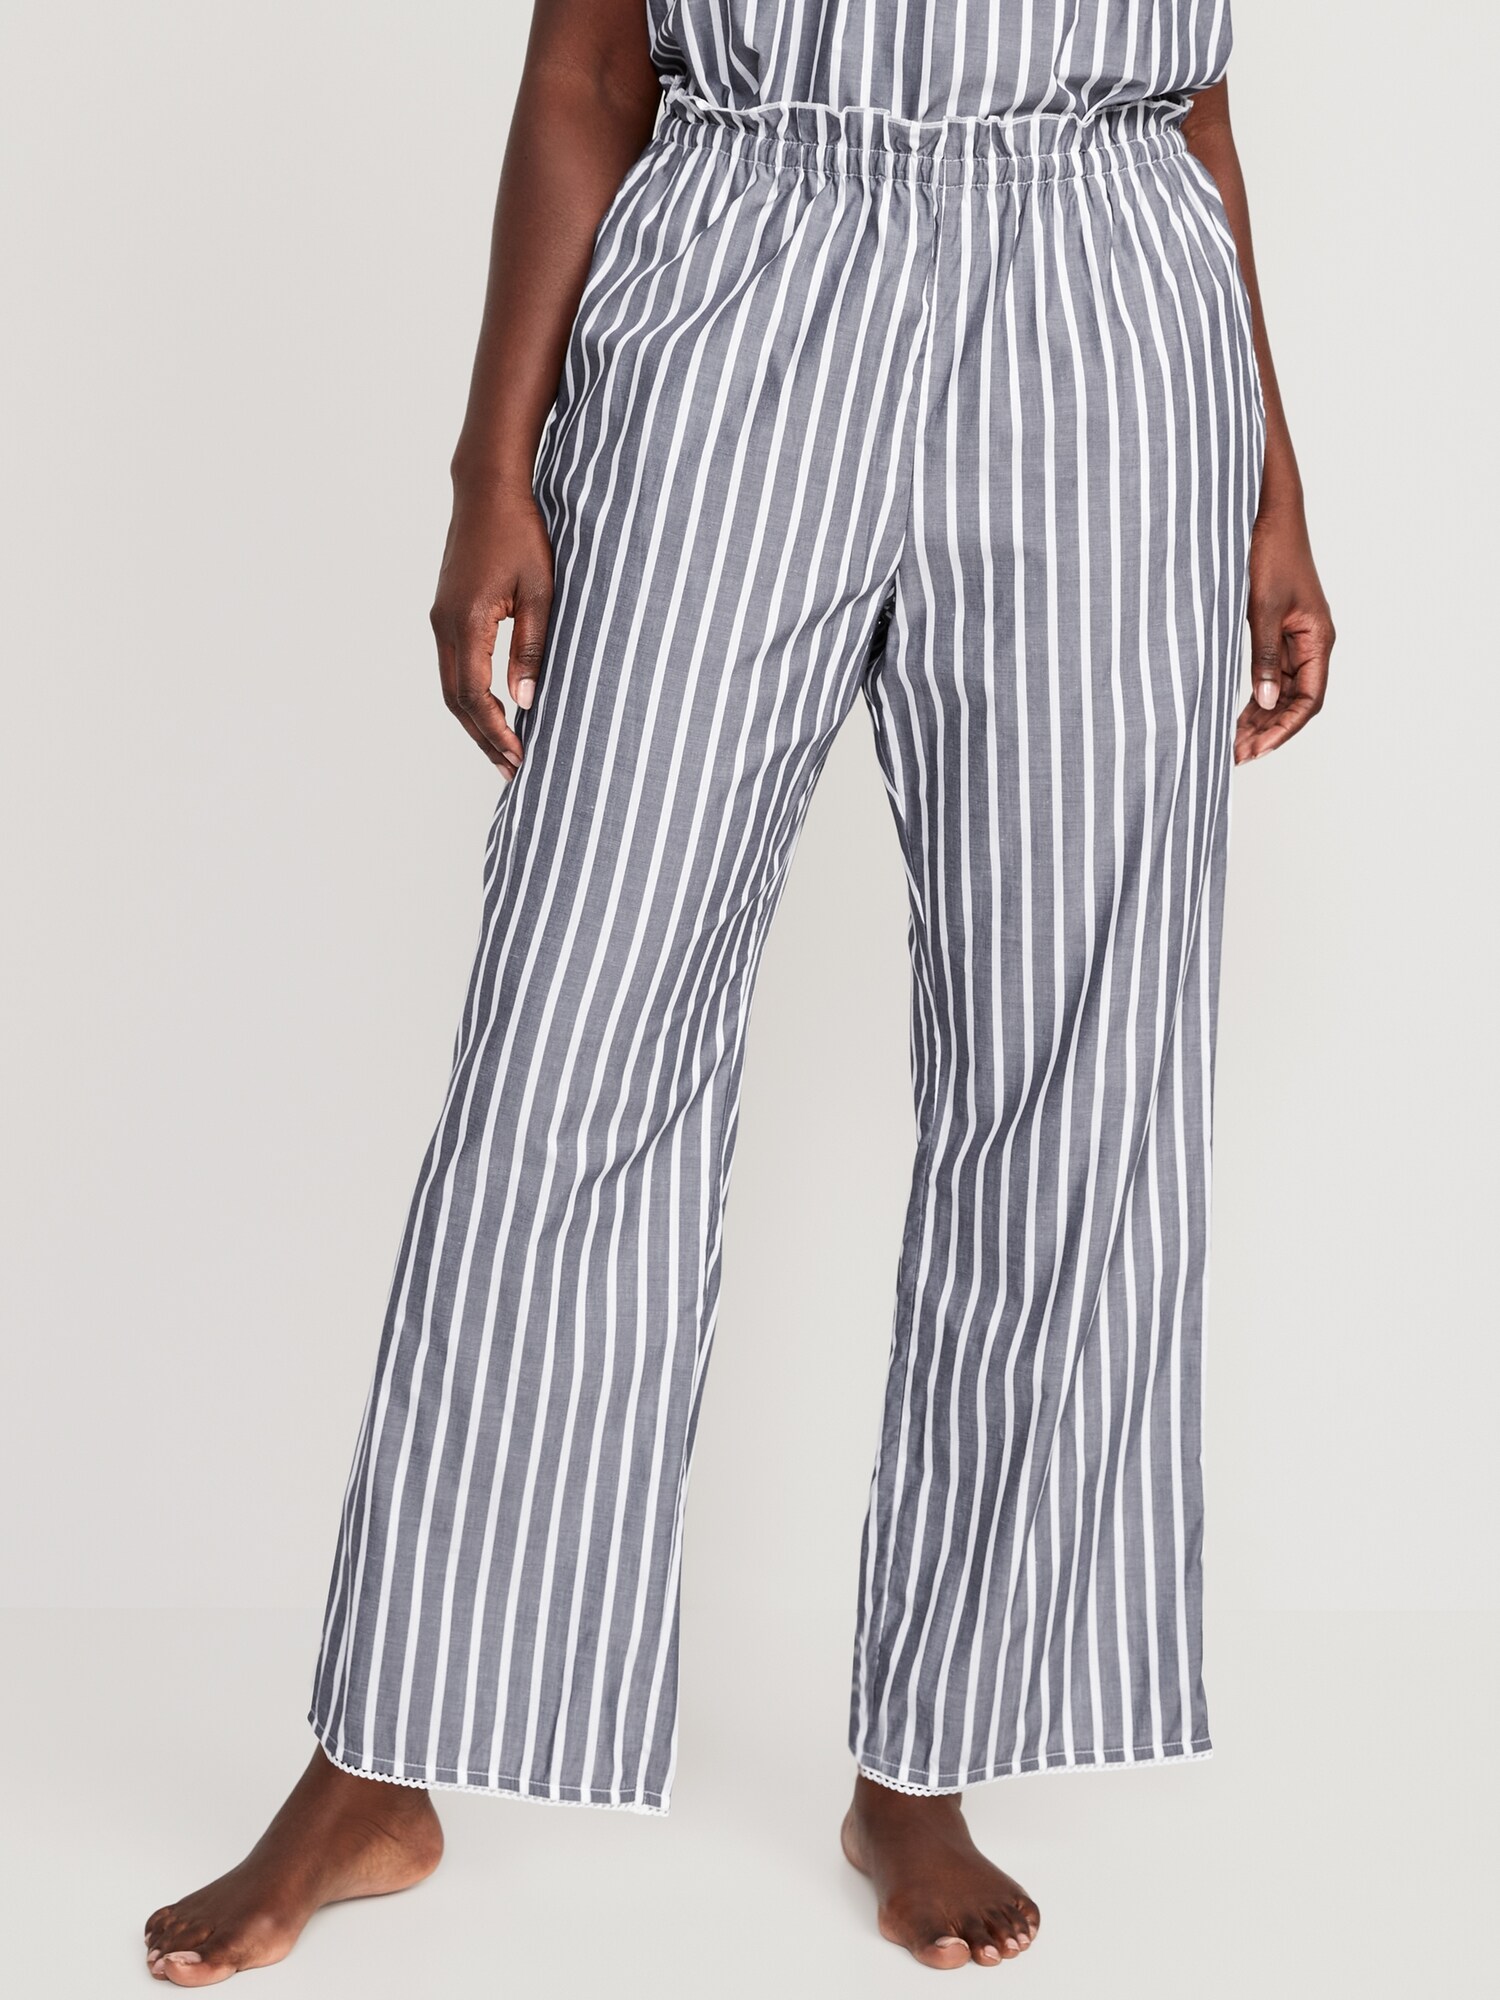 Striped Pajama Pant for Tall Women - Amalli Talli